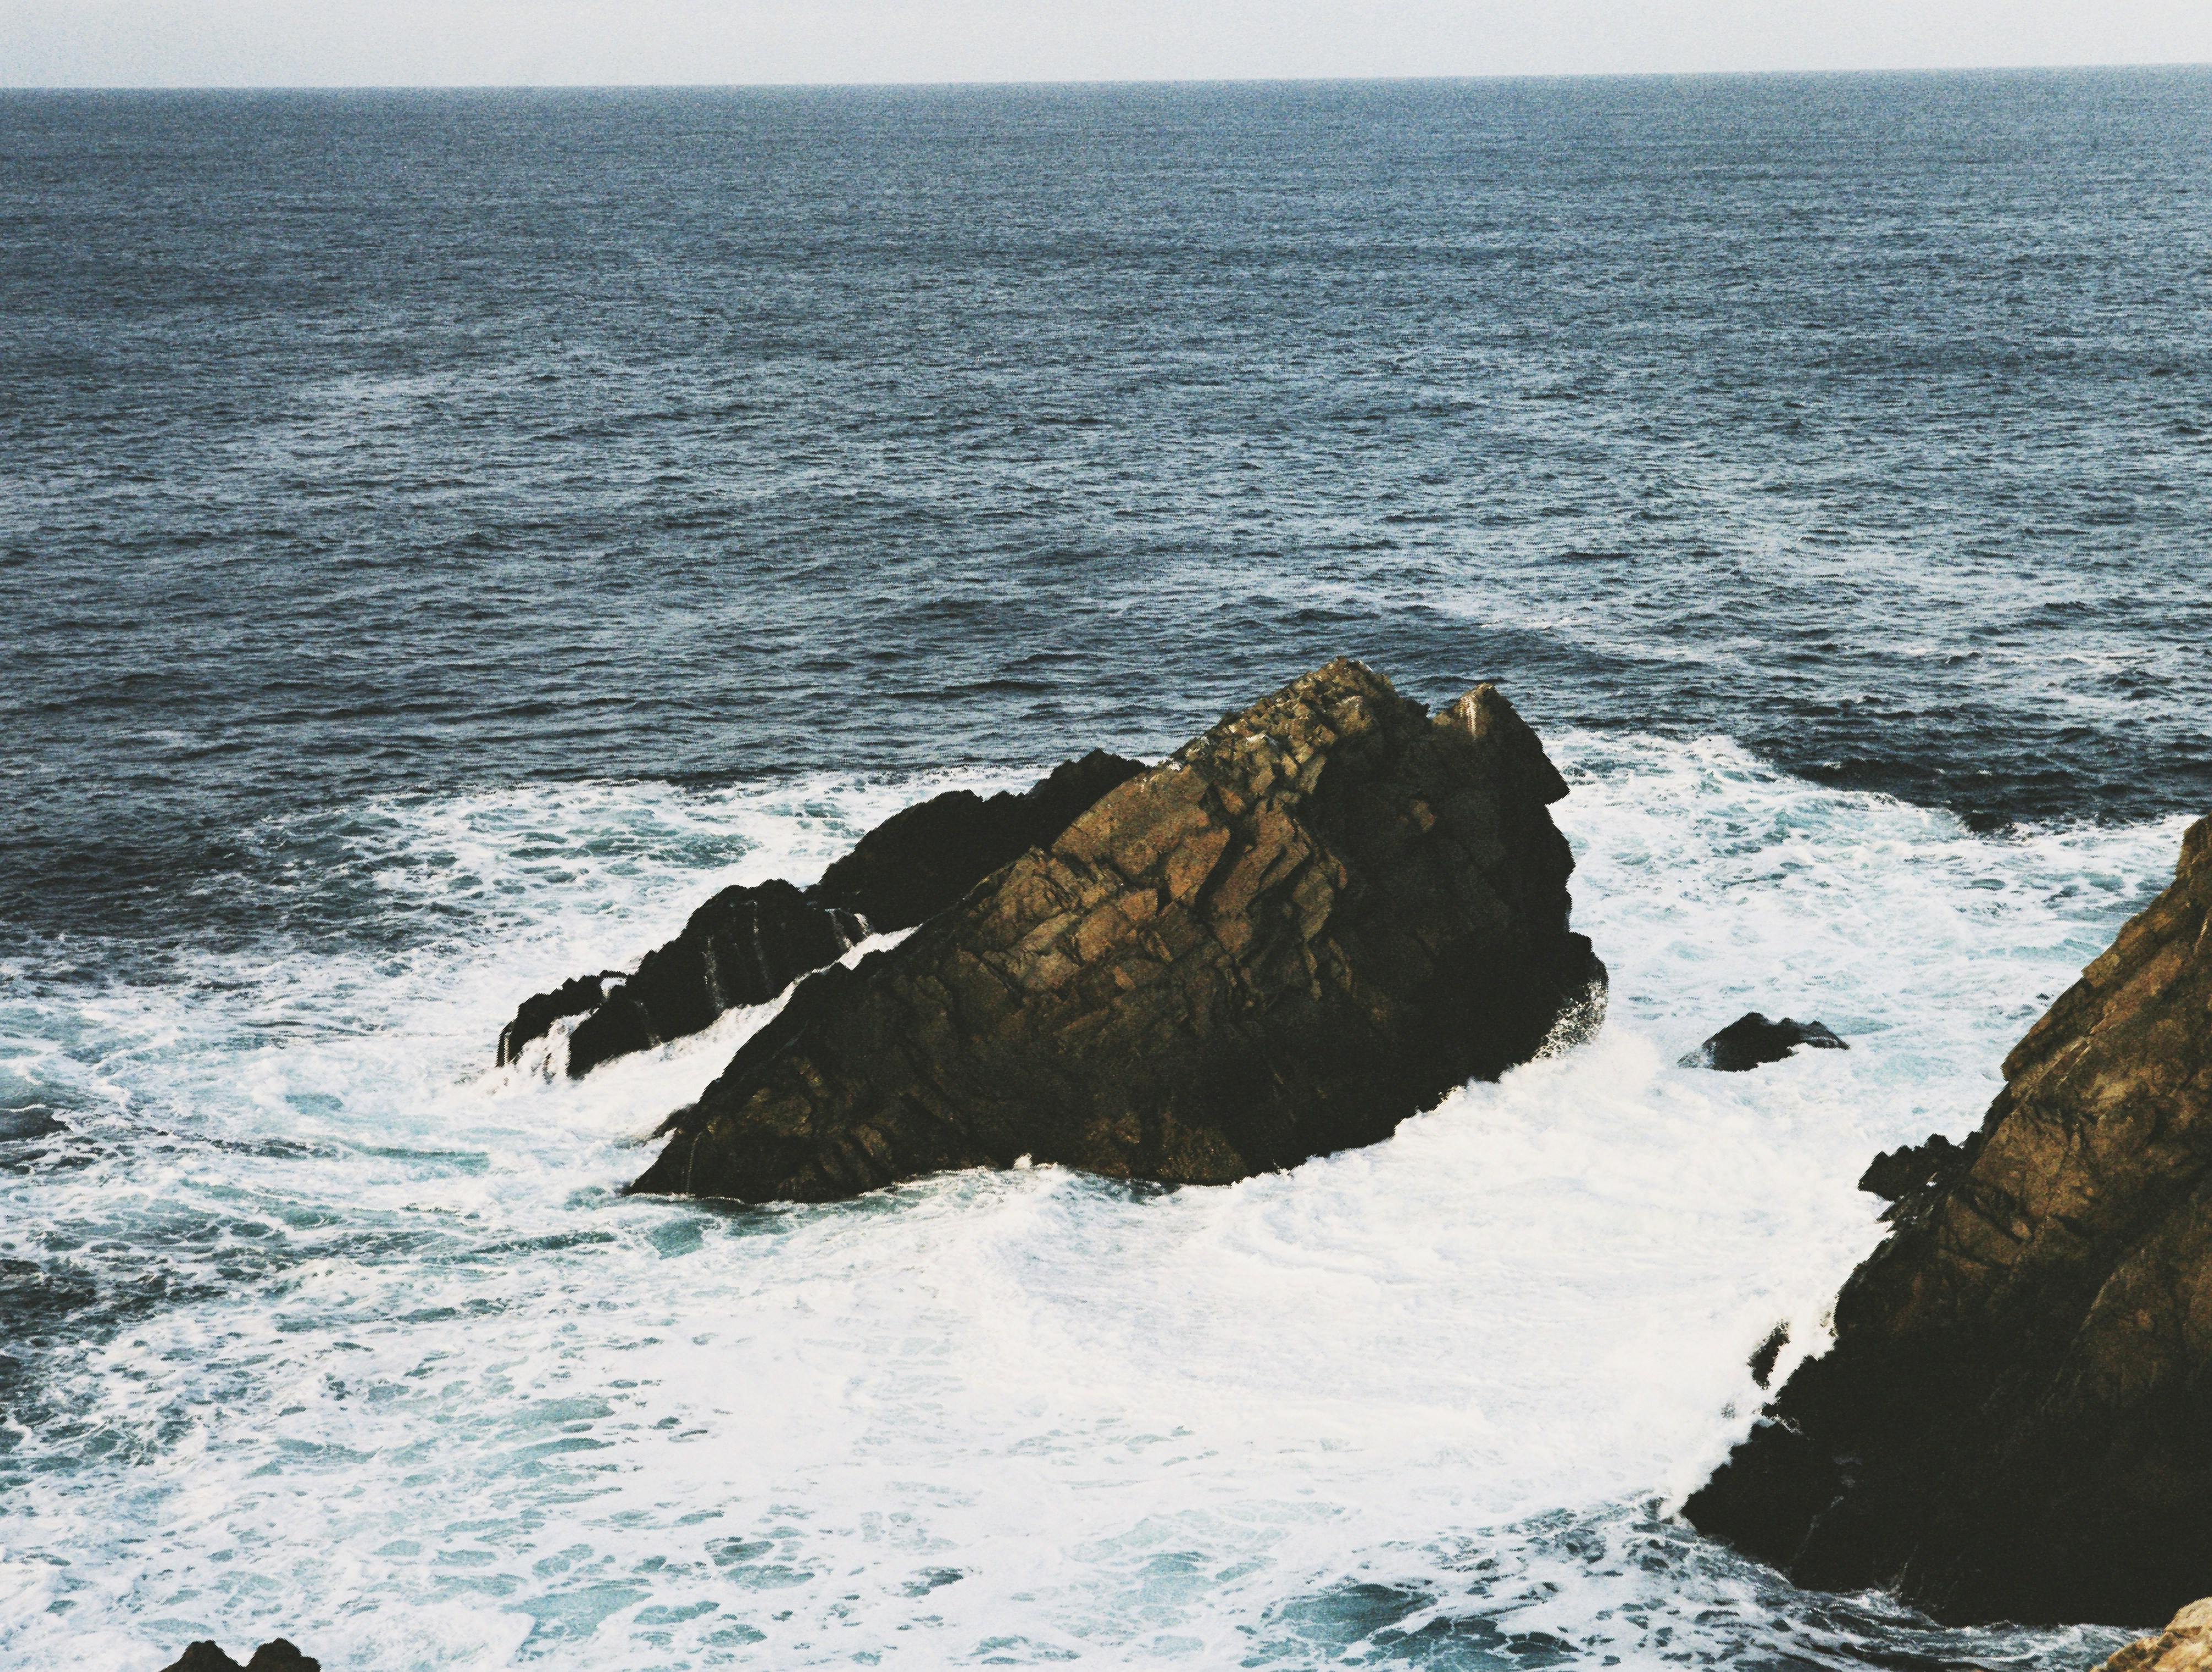 Taken on medium format CineStill film with a Mamiya 645. Waves crashing on rocks in the ocean in Newfoundland, Canada.